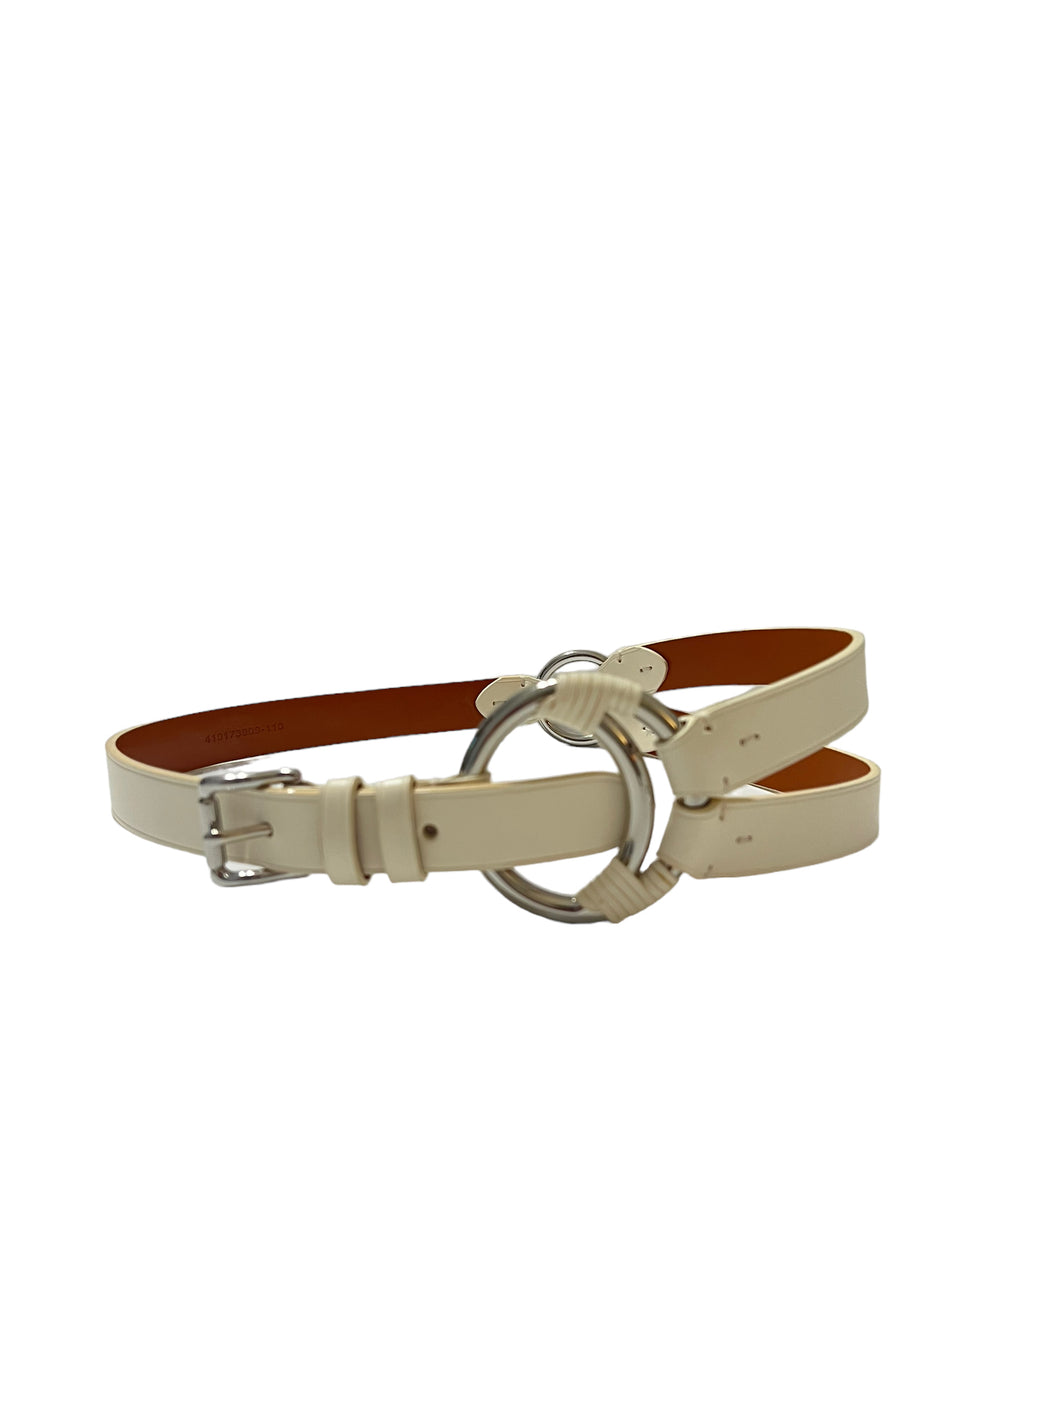 RALPH LAUREN Vachetta Leather Crescent O-Ring Equestrian TRI-STRAP Waist Belt M